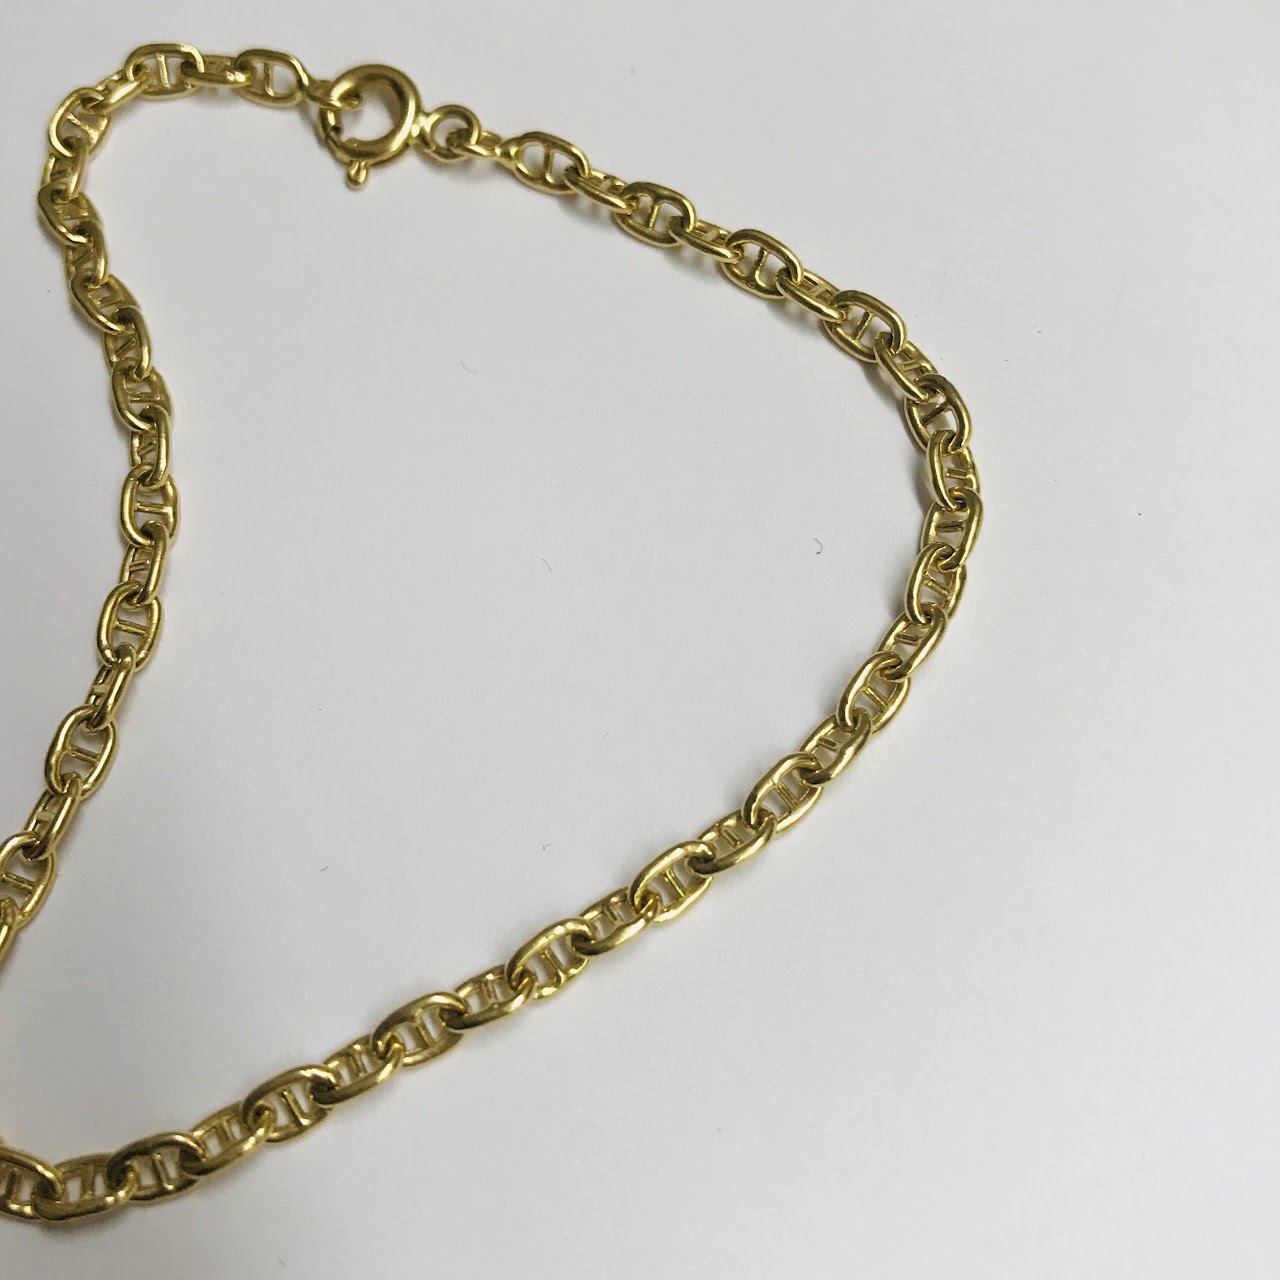 18K Gold Oval Link Bracelet